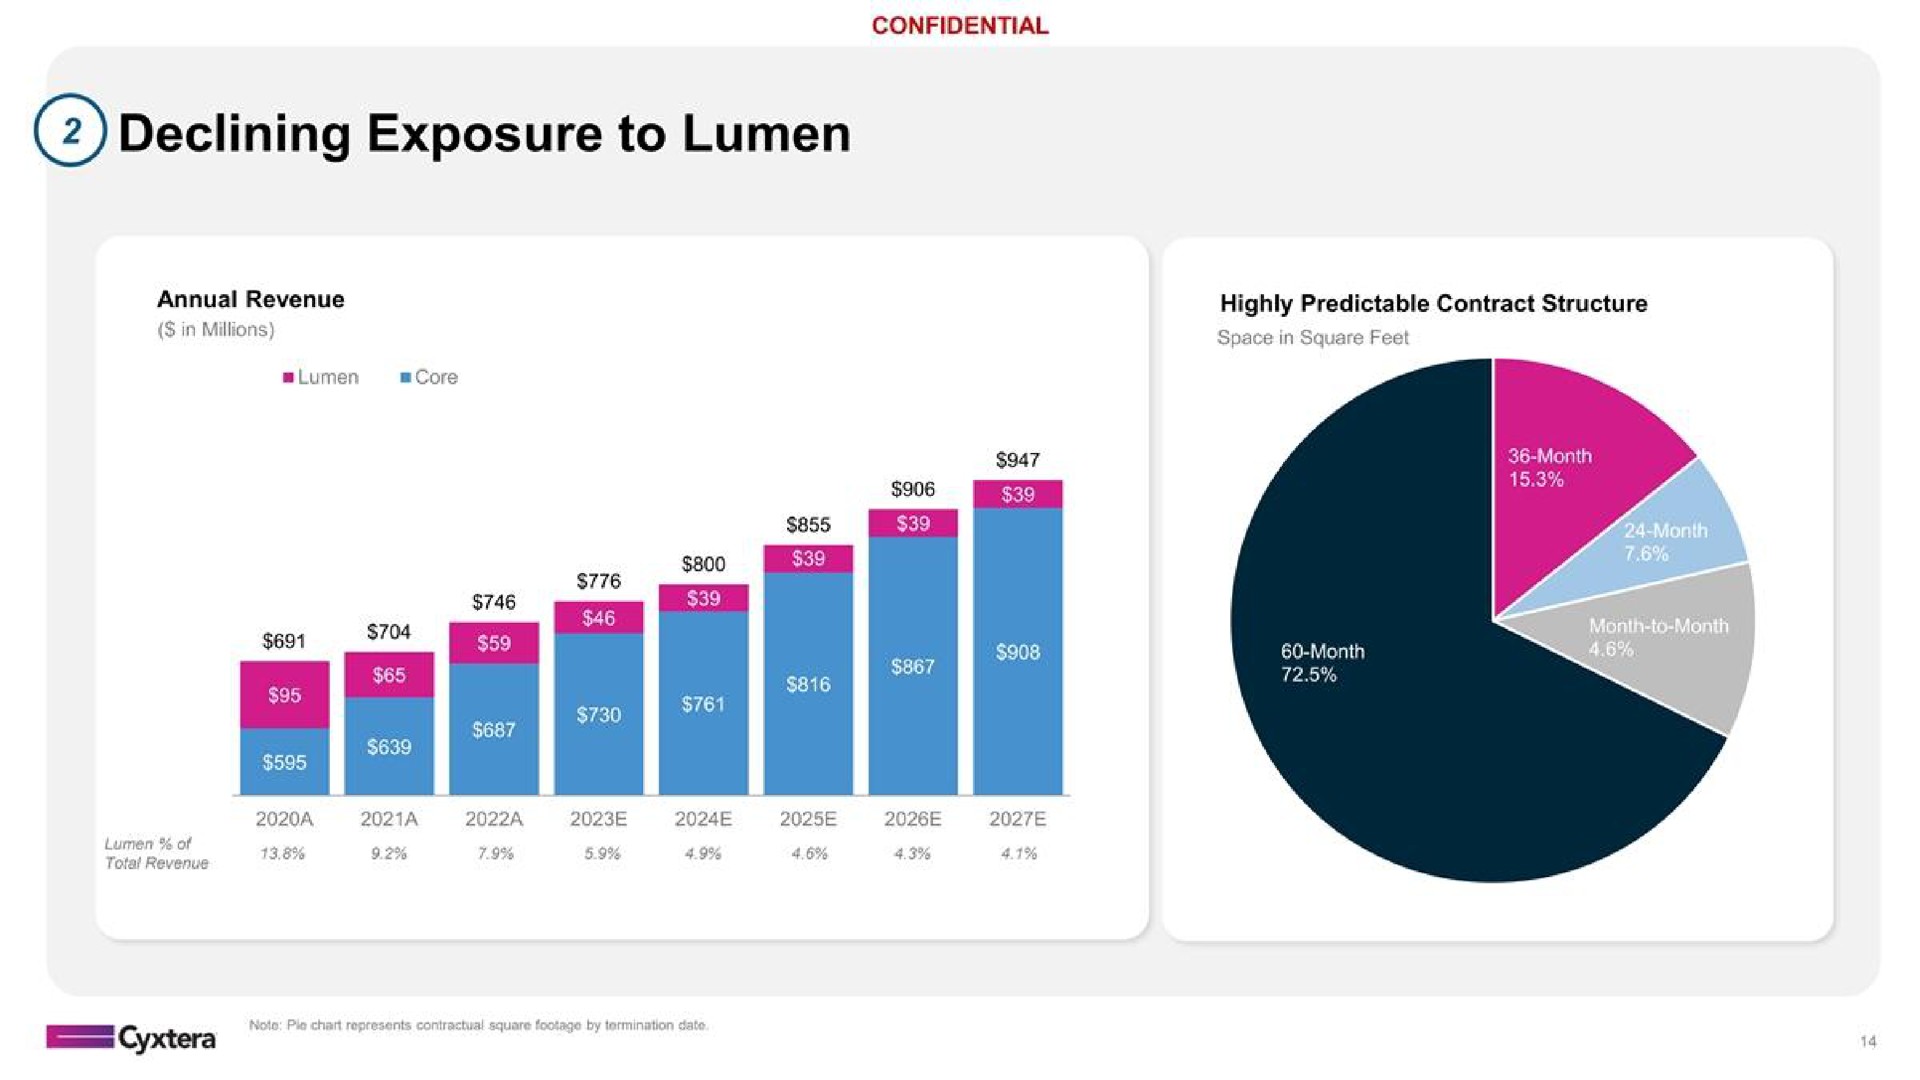 declining exposure to lumen is | Cyxtera